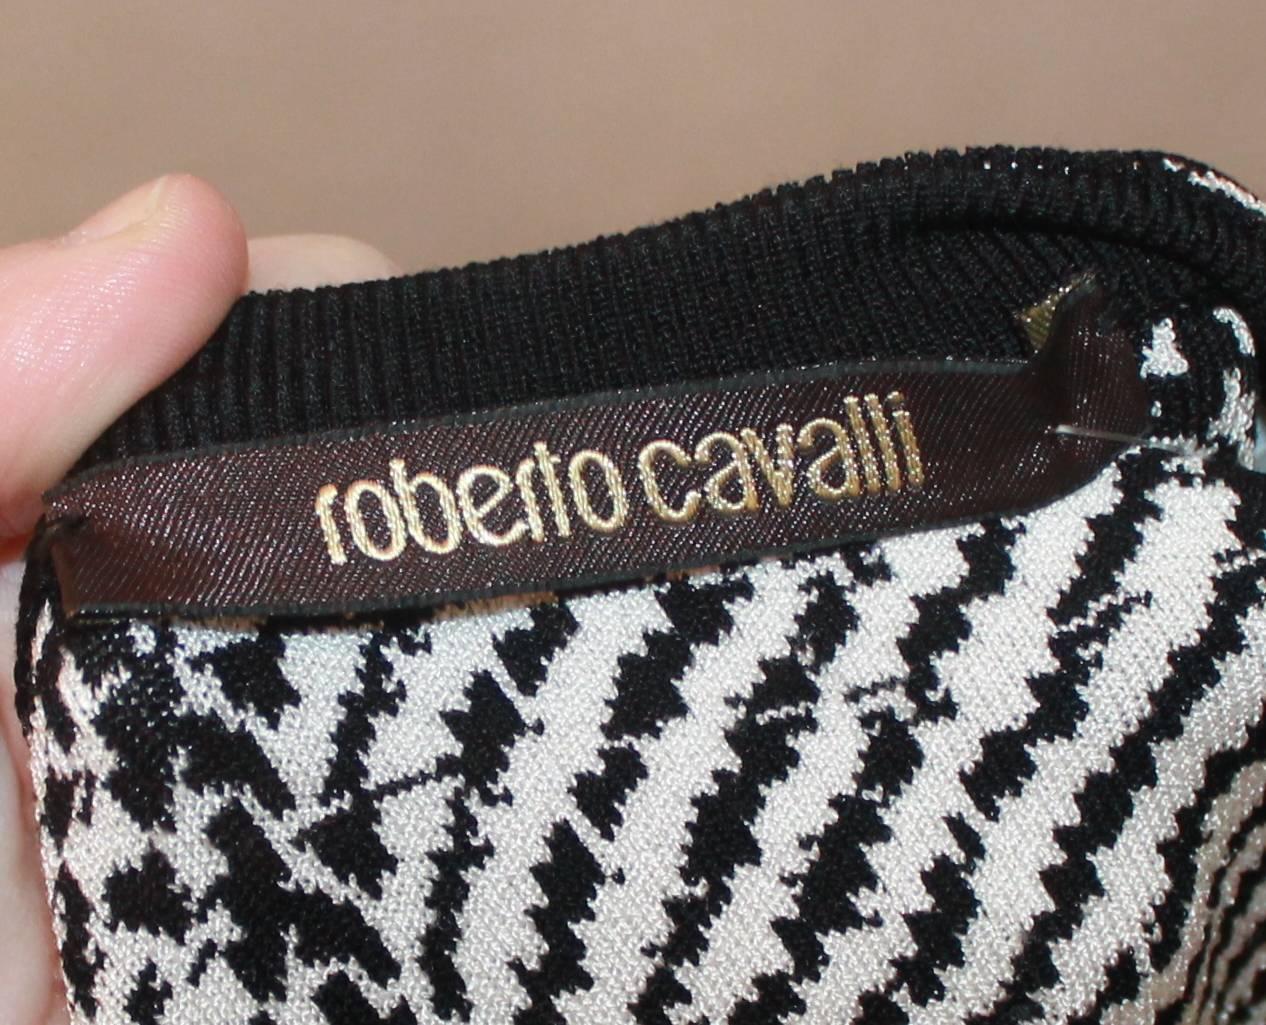 Roberto Cavalli Black, White & Red Printed Long Sleeve Dress - 40 1